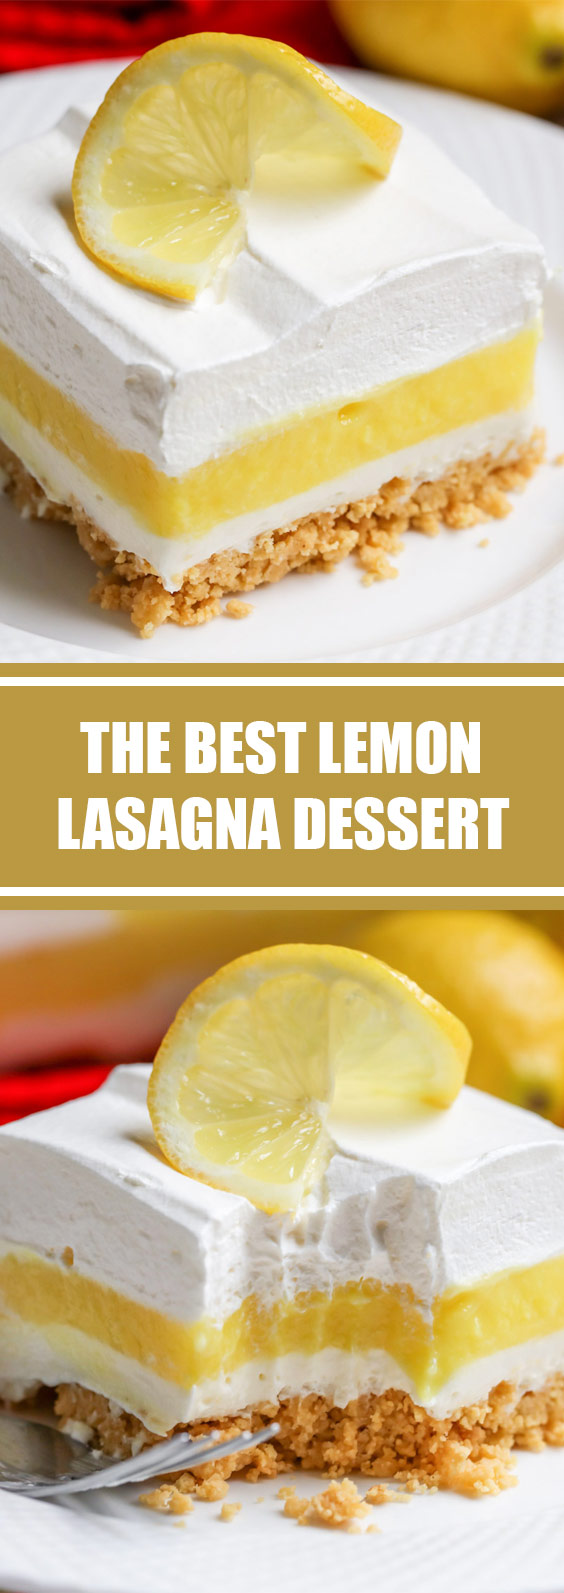 Lemon Lasagna Dessert